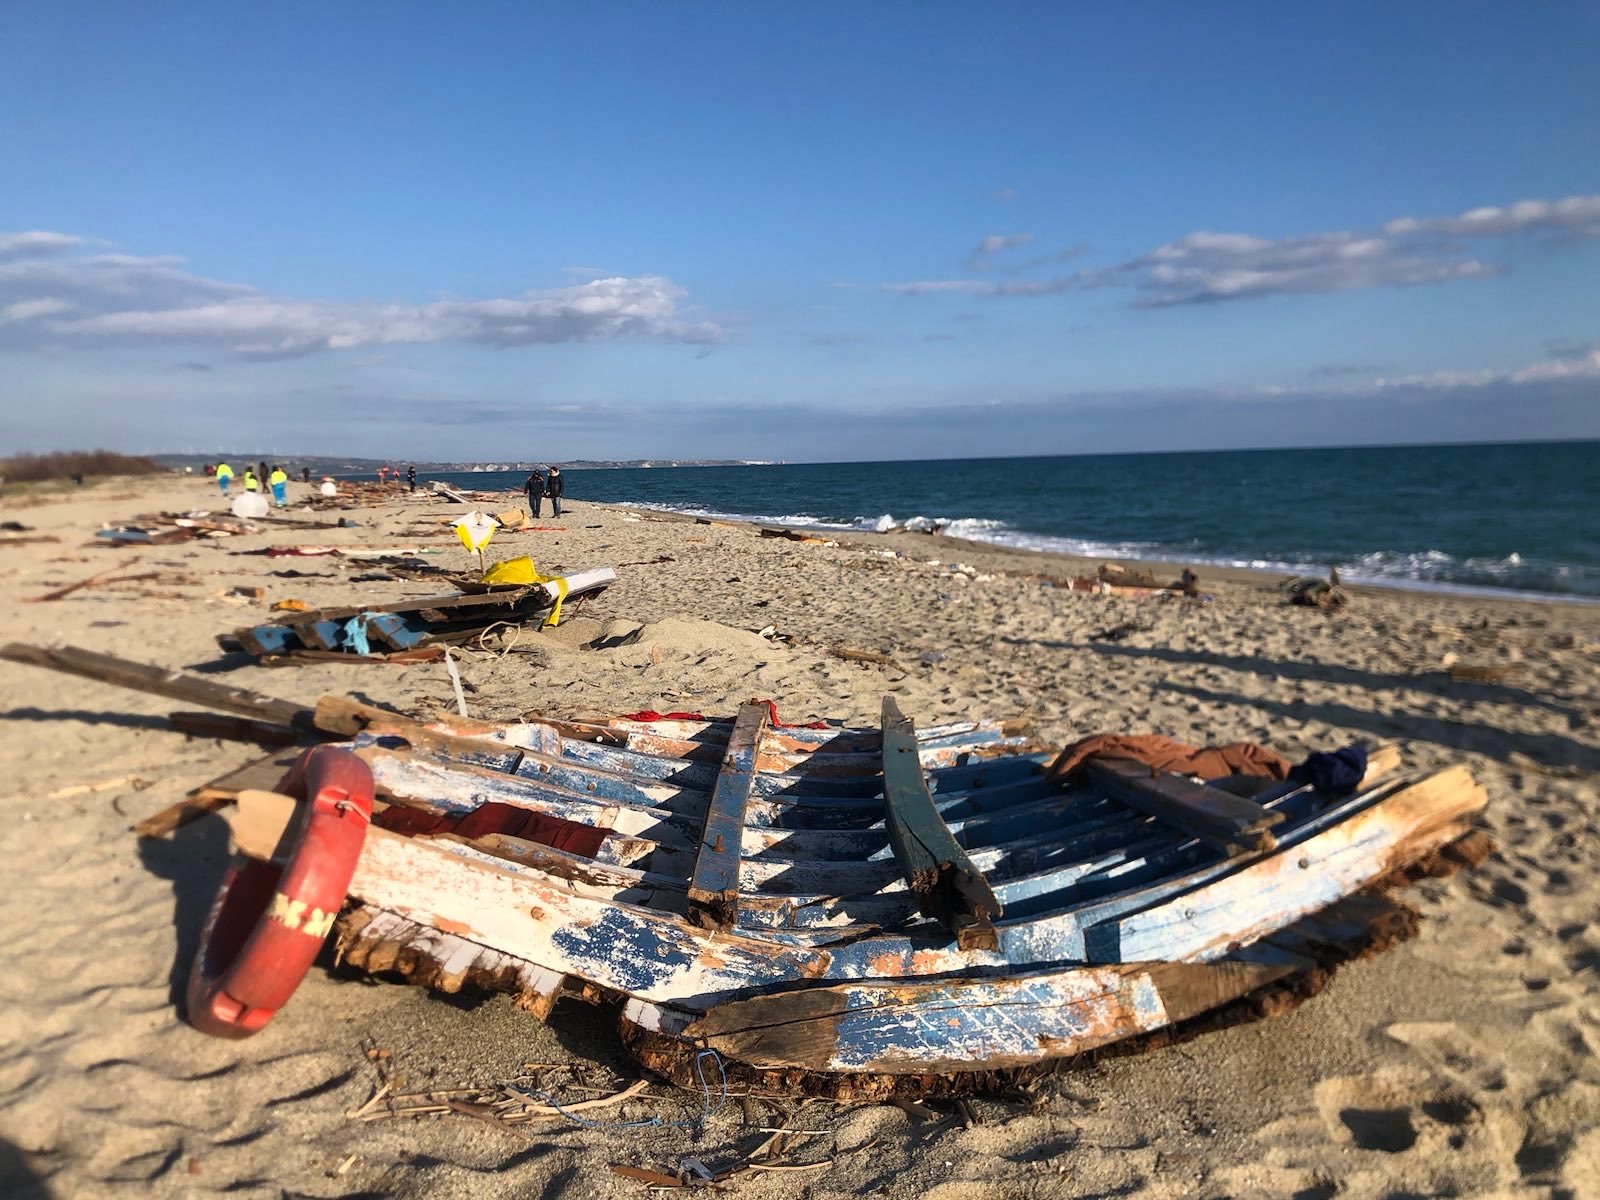 Shipwreck remains by a beach